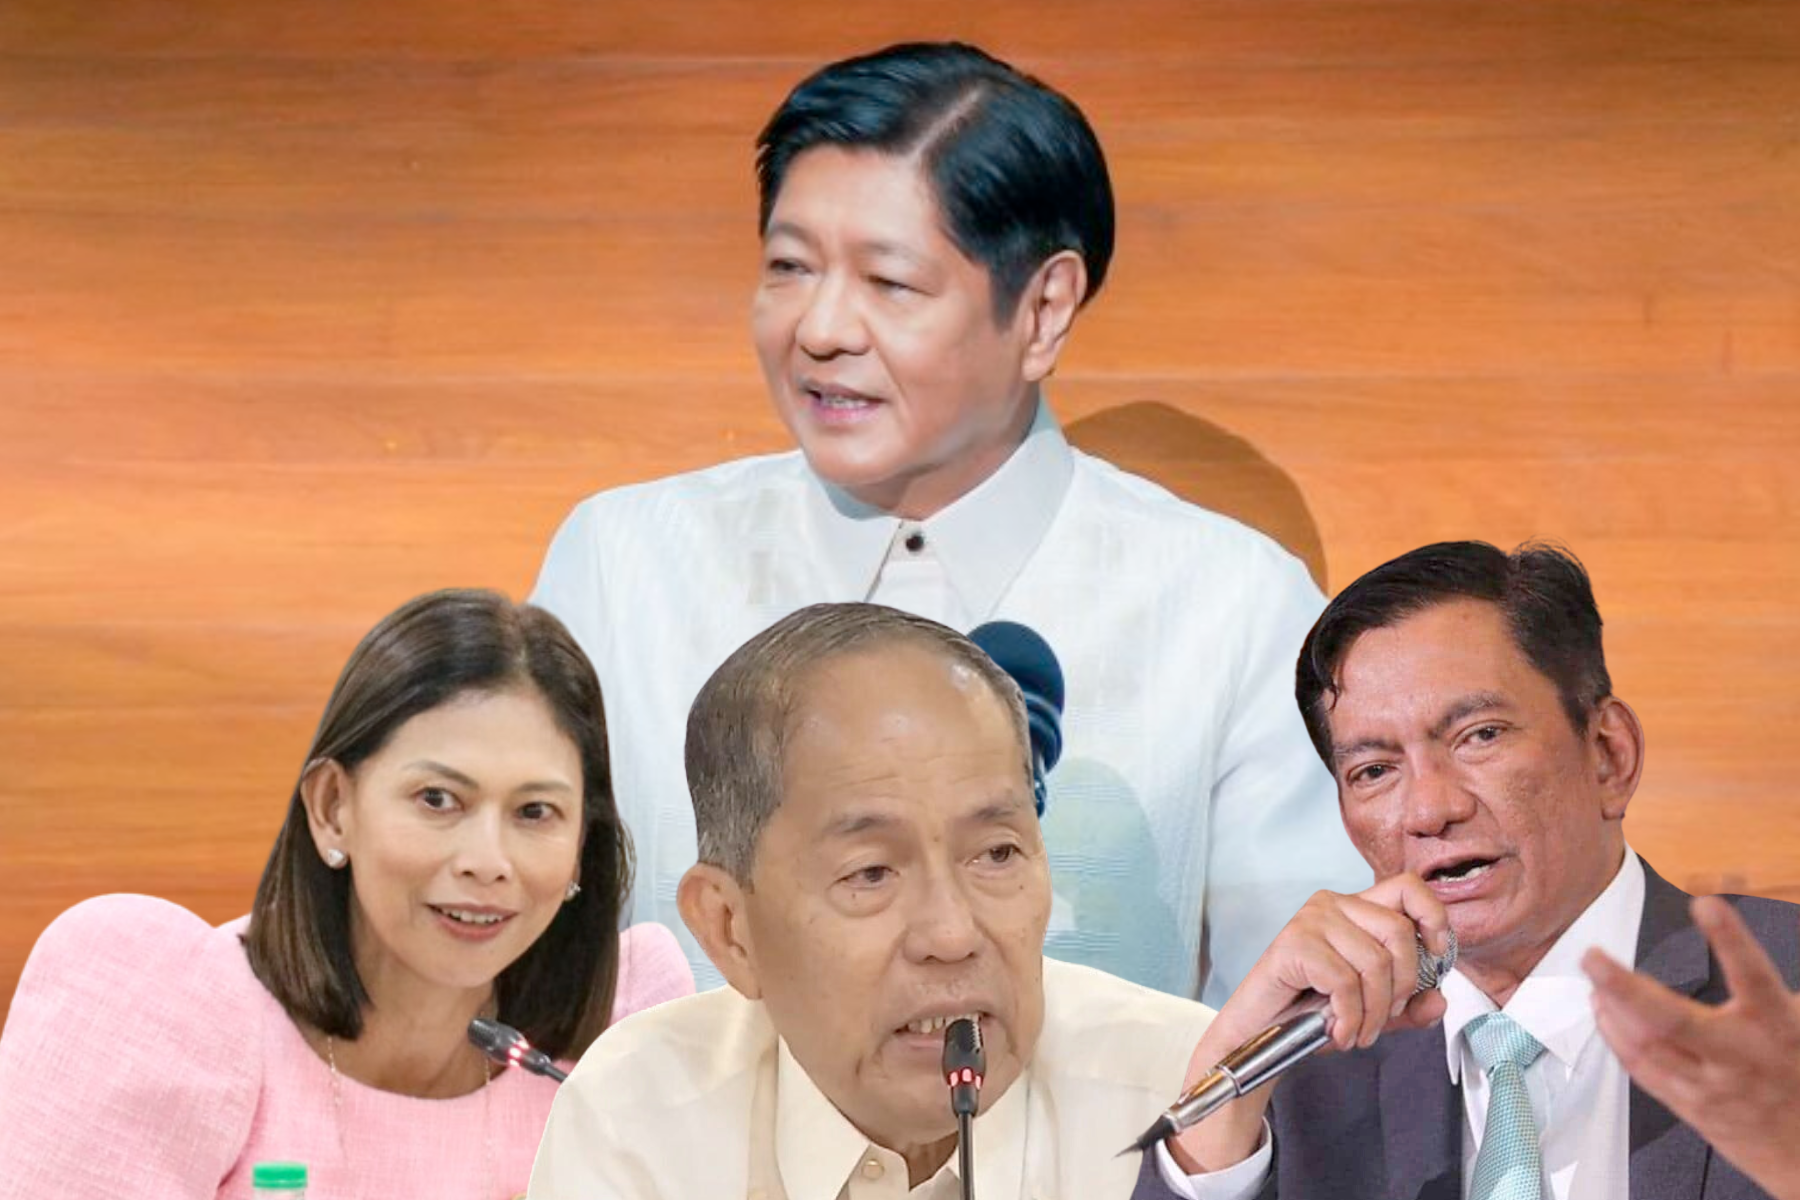 KMU blasts statements vs wage hike: “Wala kayong puso”